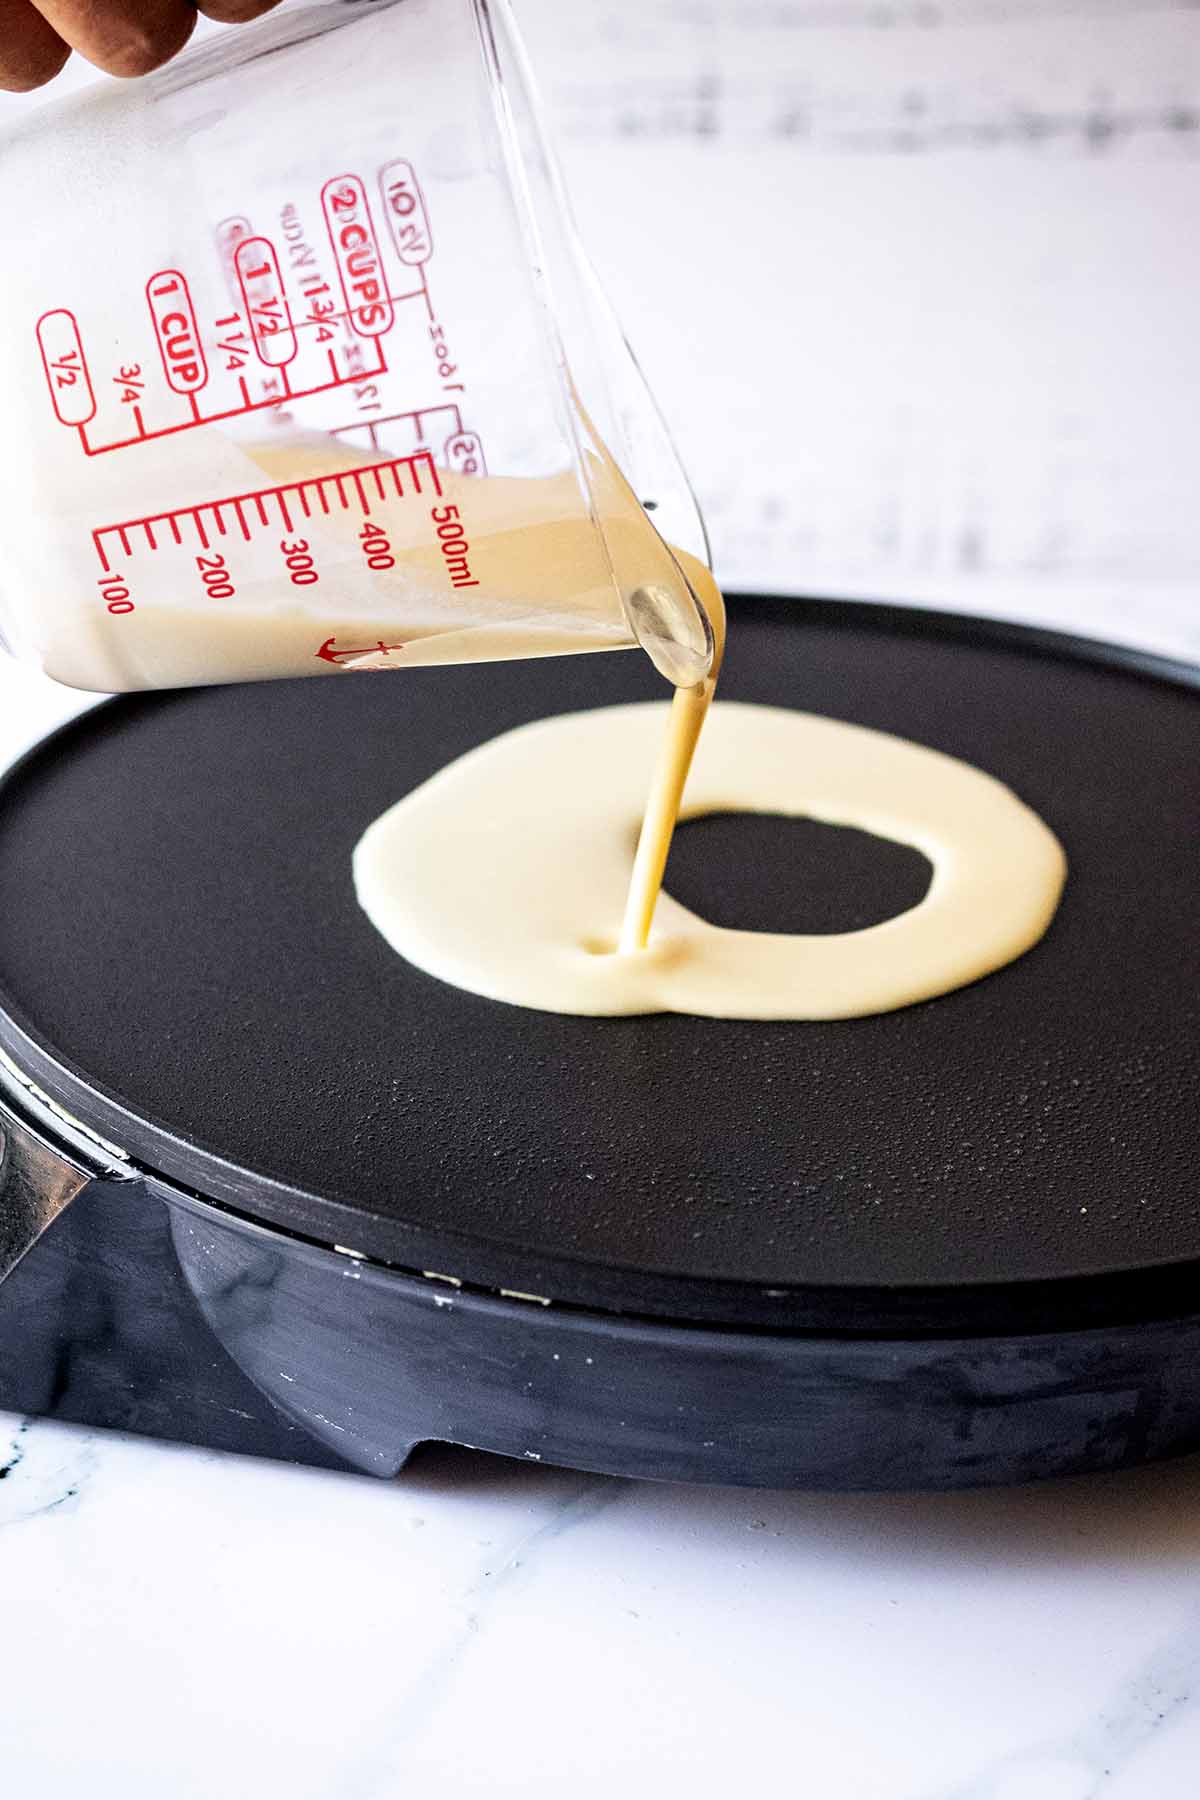 Crepe batter being poured onto a hot griddle